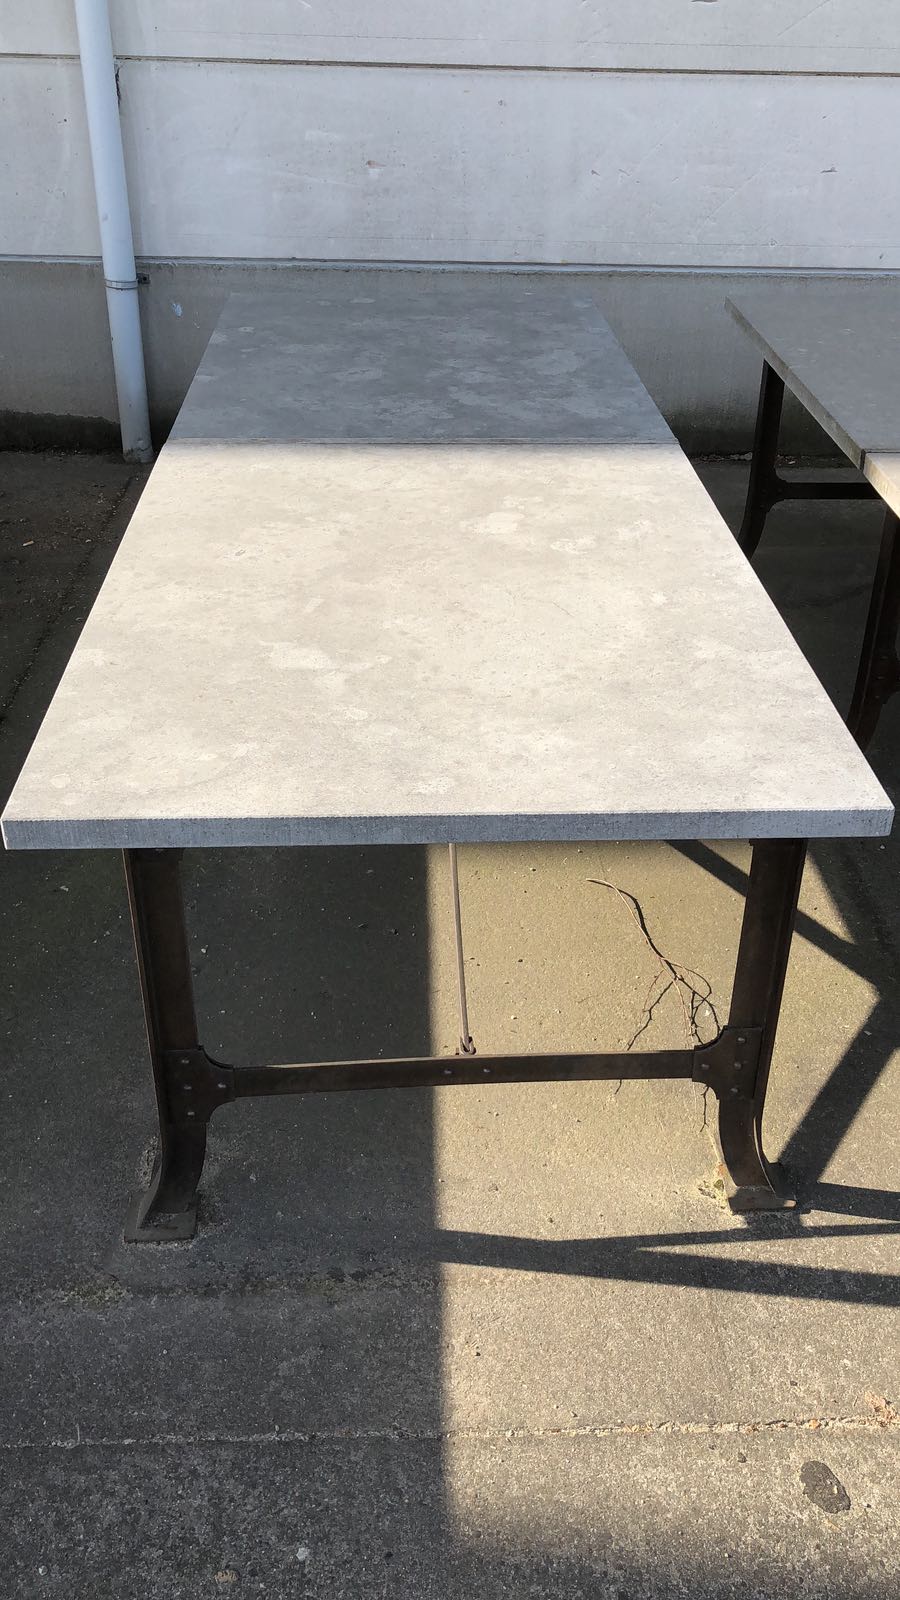 Bluestone outdoor table by Heerenhuis: set over a metal base